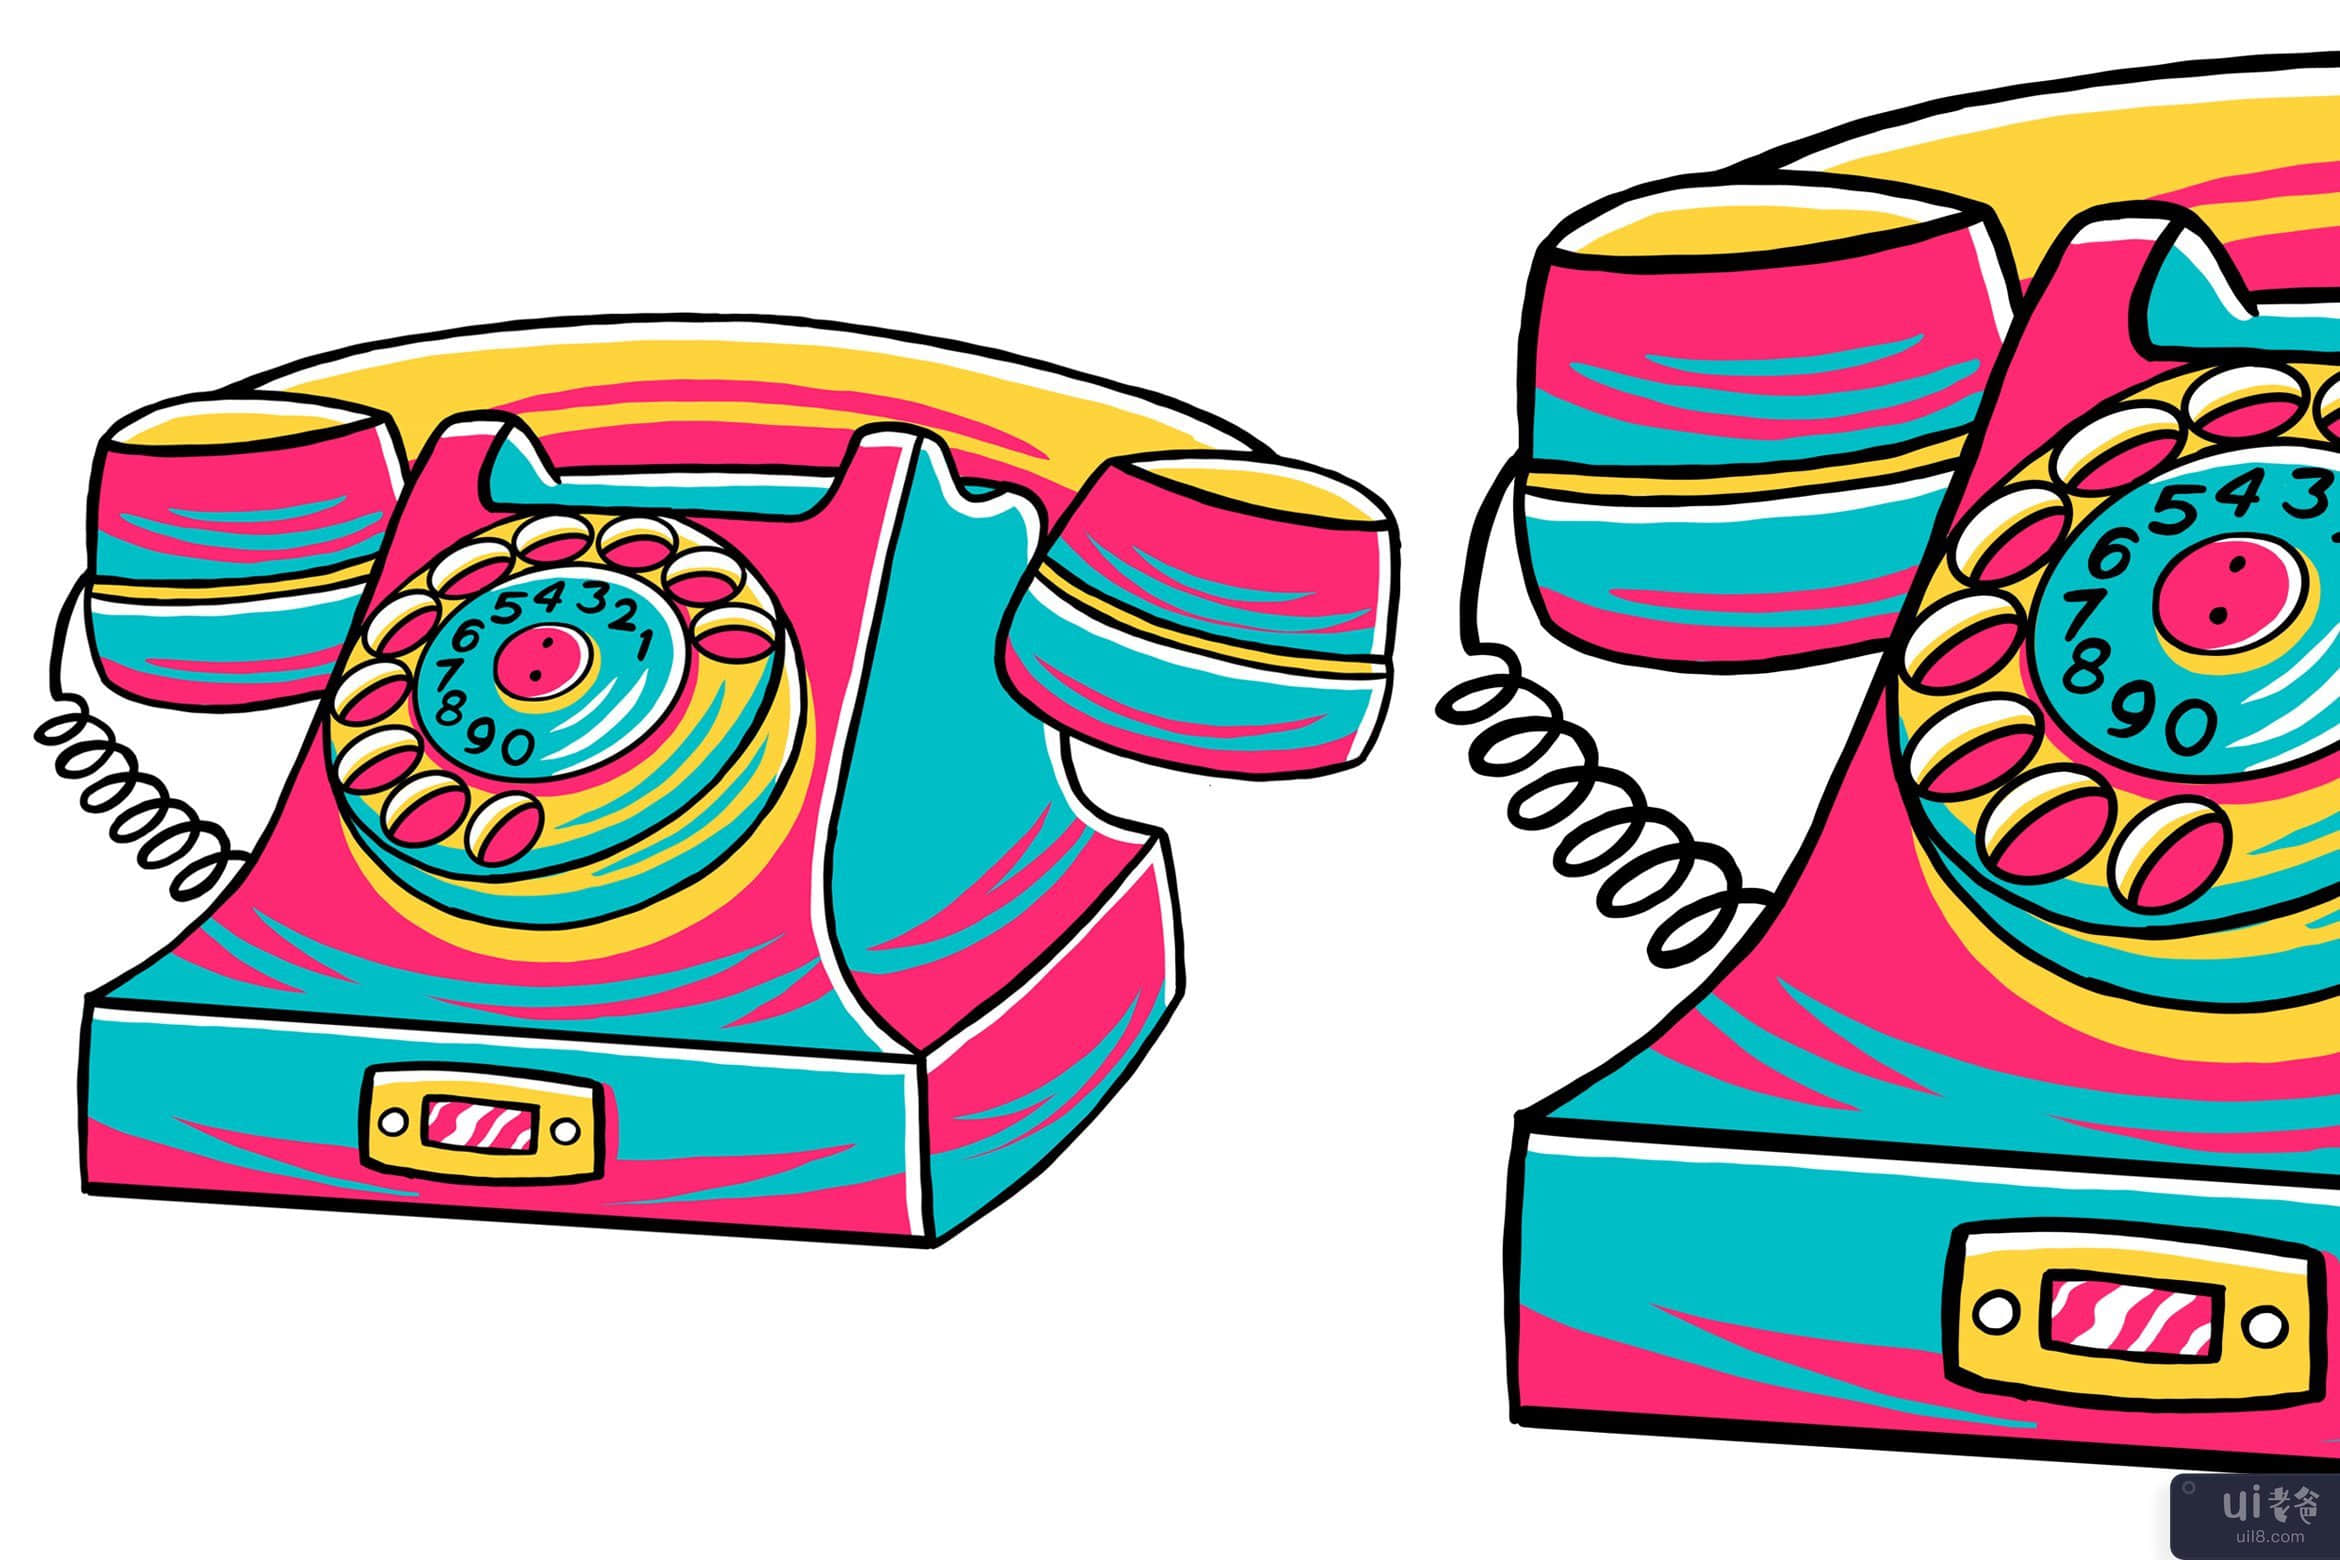 90 年代的氛围-电话矢量图(90's Vibe - Telephone Vector Illustration)插图2